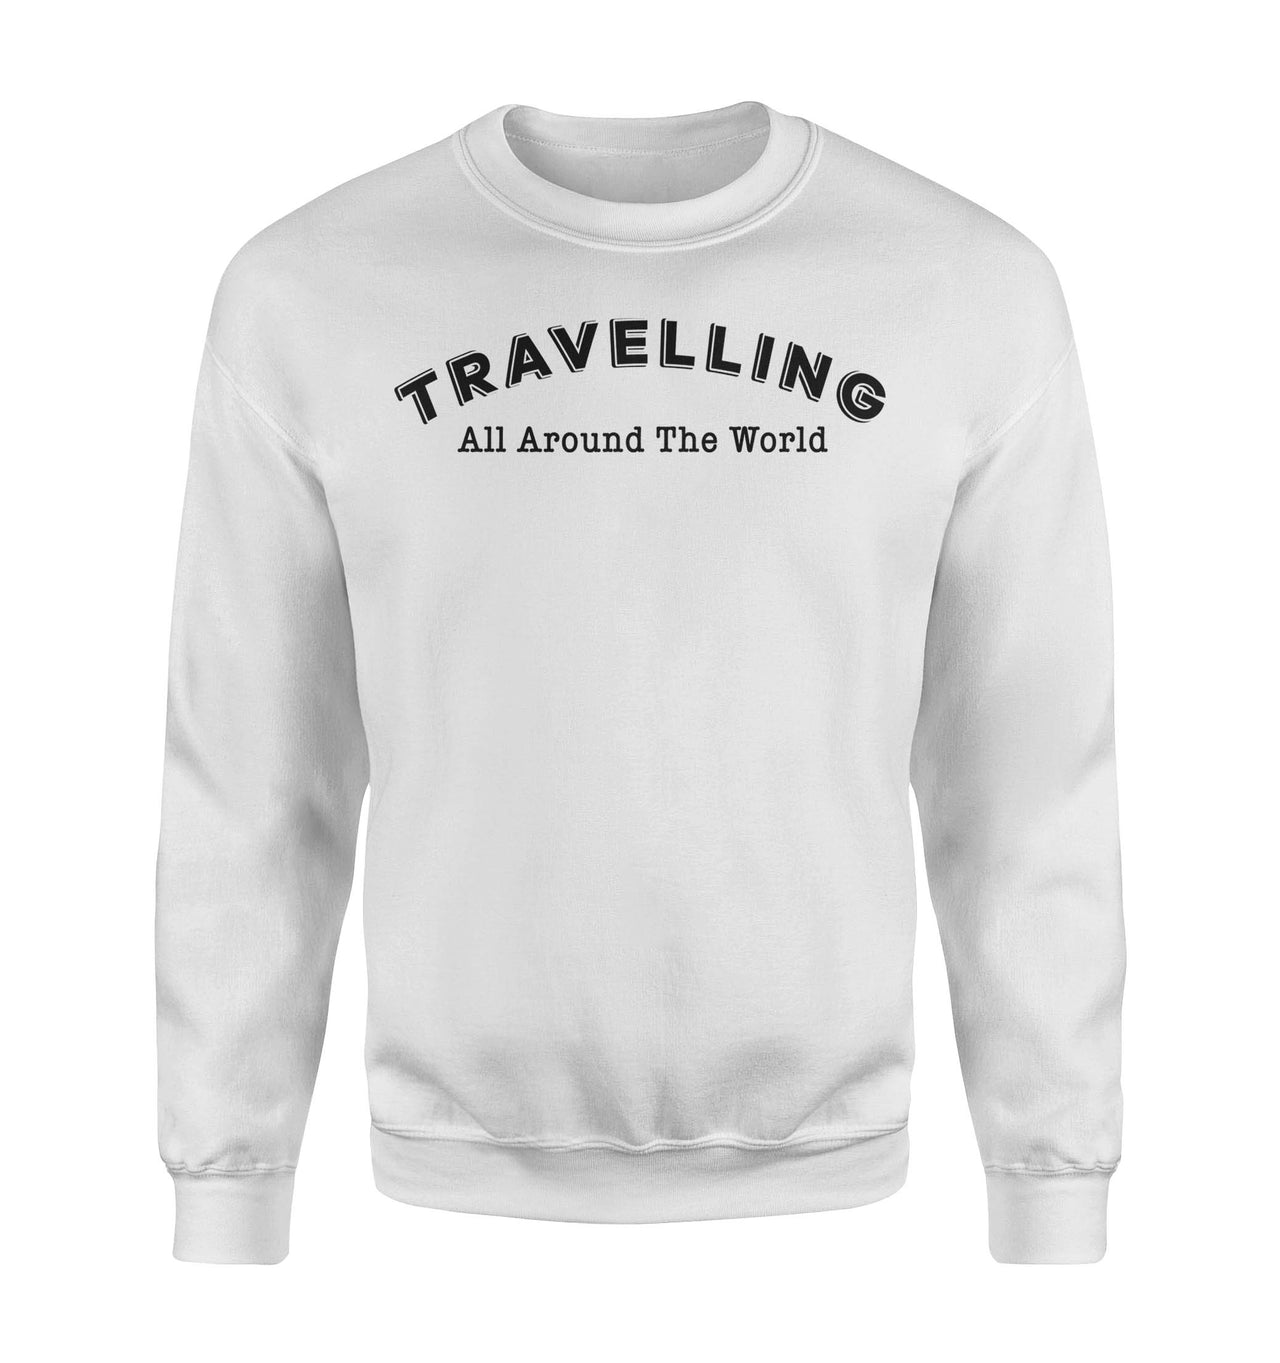 Travelling All Around The World Designed Sweatshirts